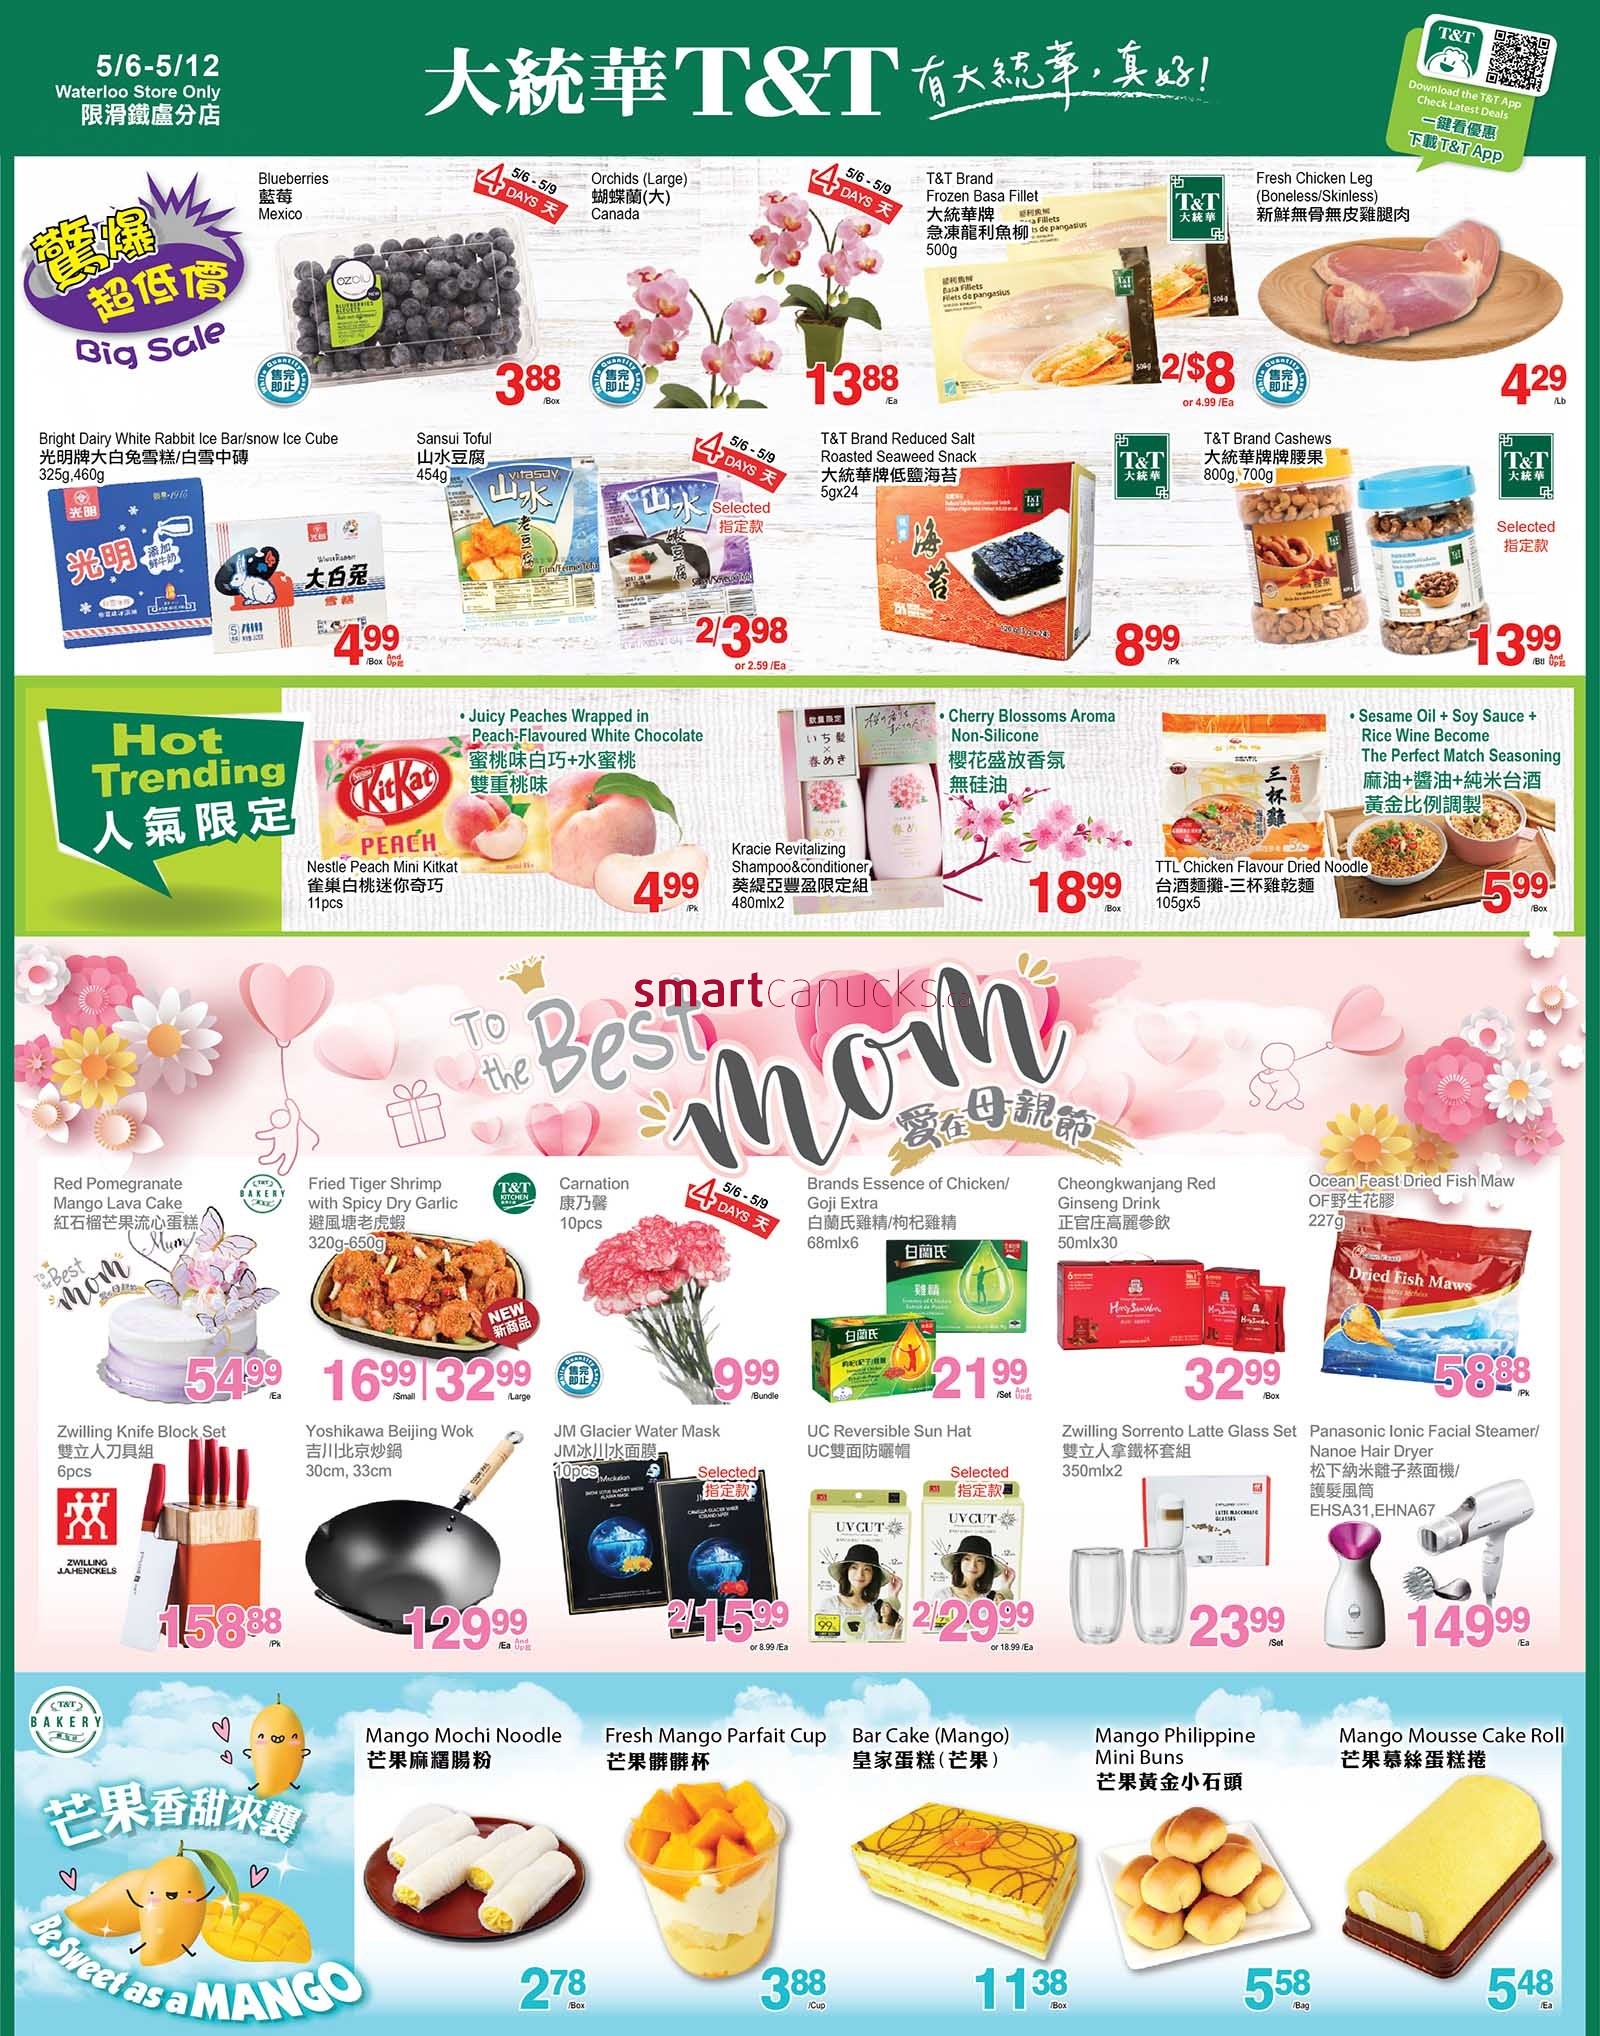 tt-supermarket-waterloo-flyer-may-6-to-12-1.jpg